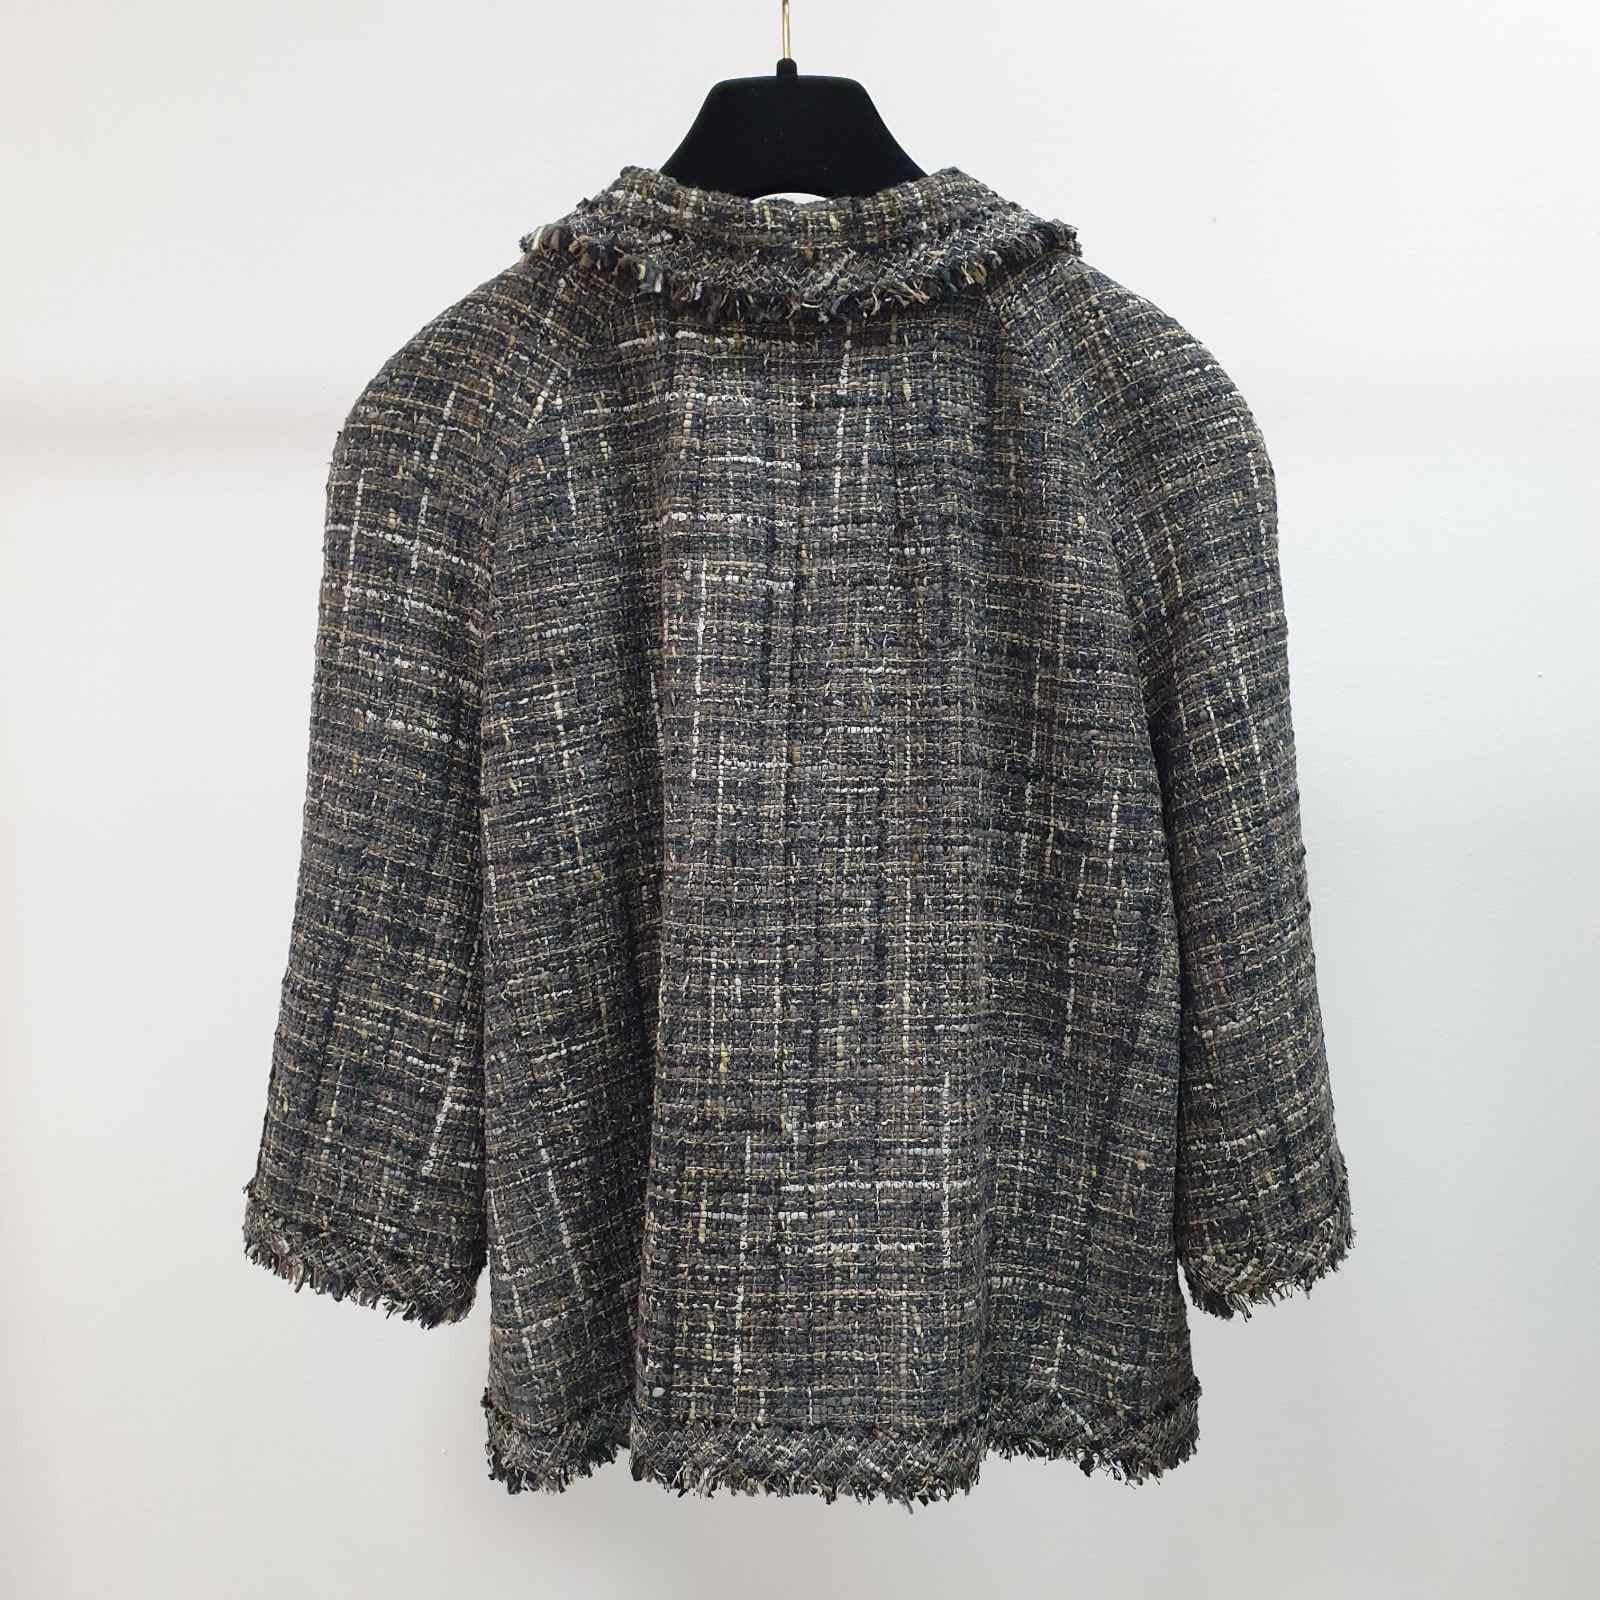 Chanel Fringe Tweed Jacket In Good Condition For Sale In Krakow, PL